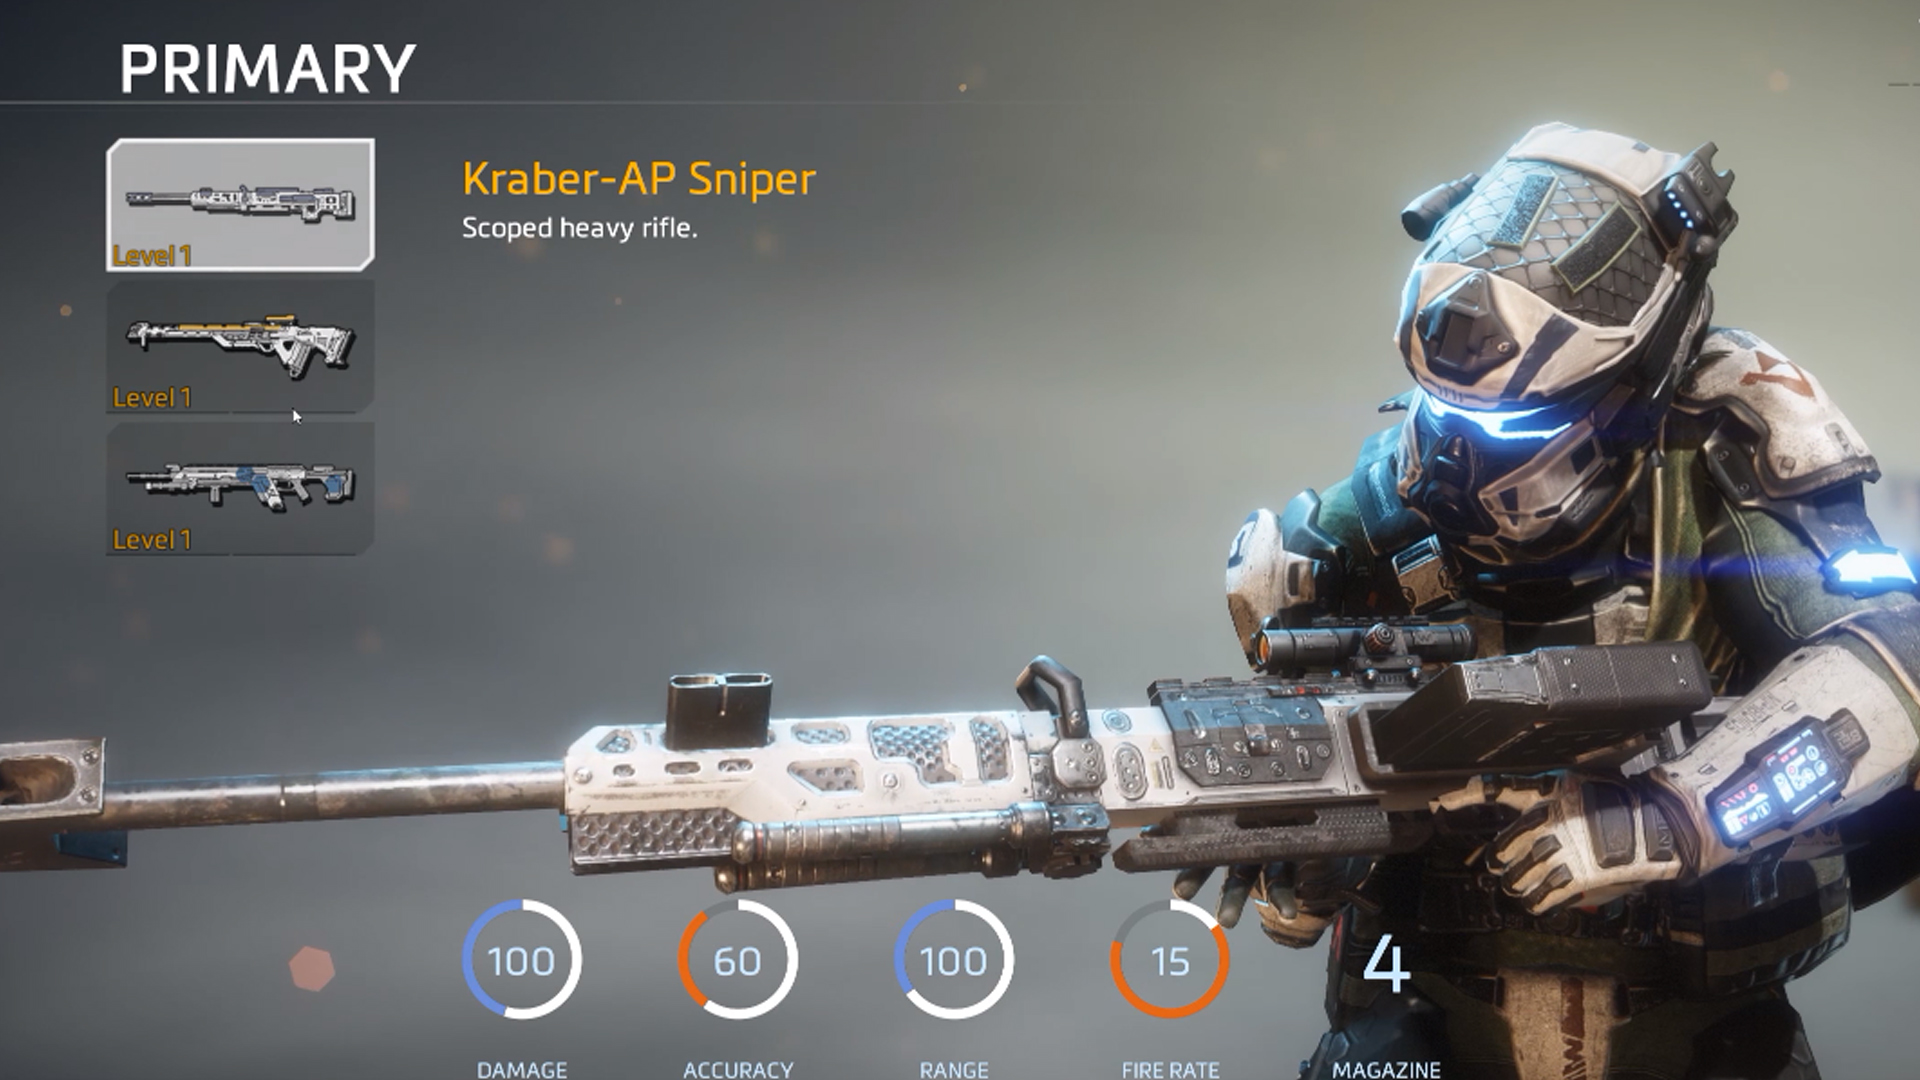 Primary - Kraber-AP Sniper